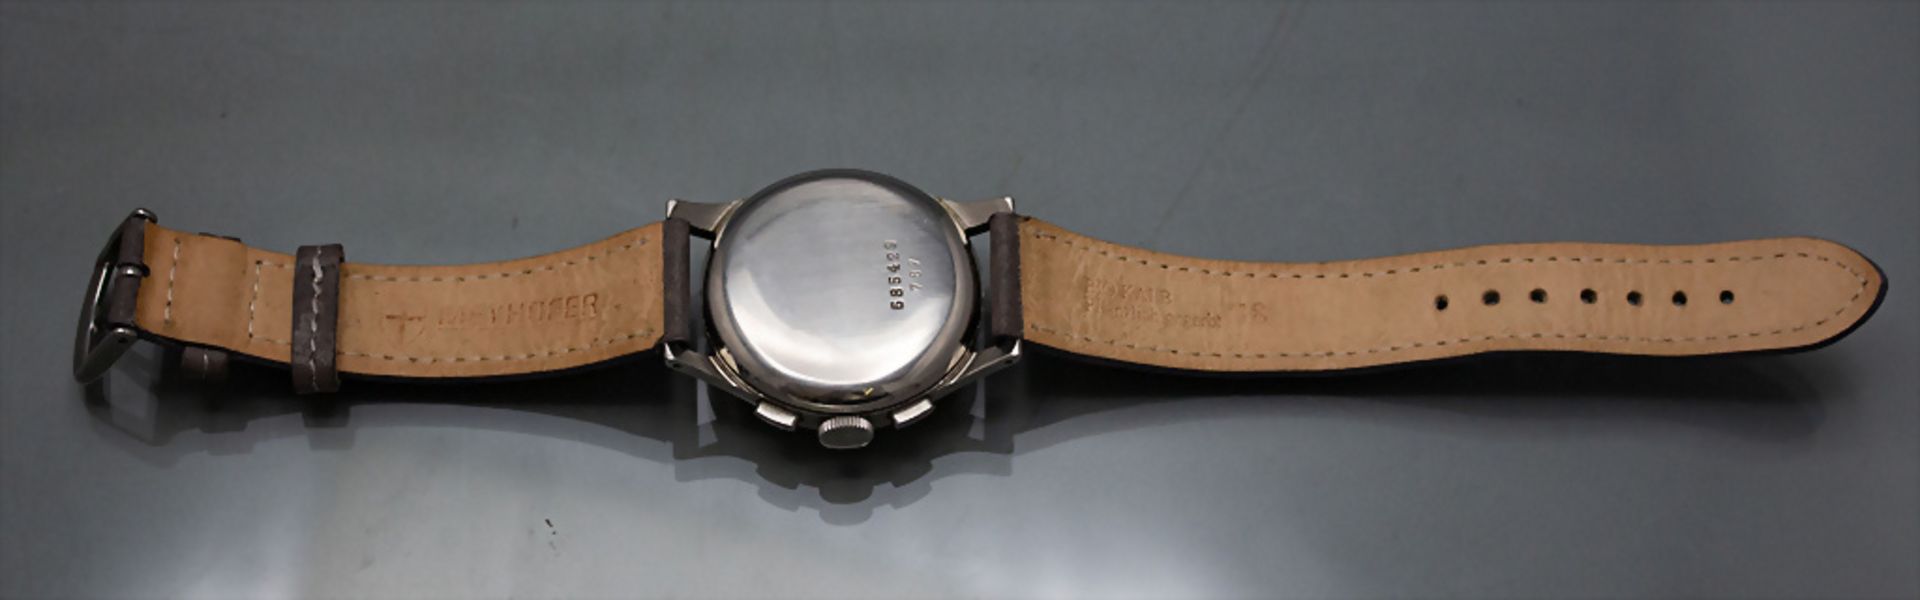 Breitling Premier Chronograph, Schweiz/Swiss, um 1946 - Image 7 of 10